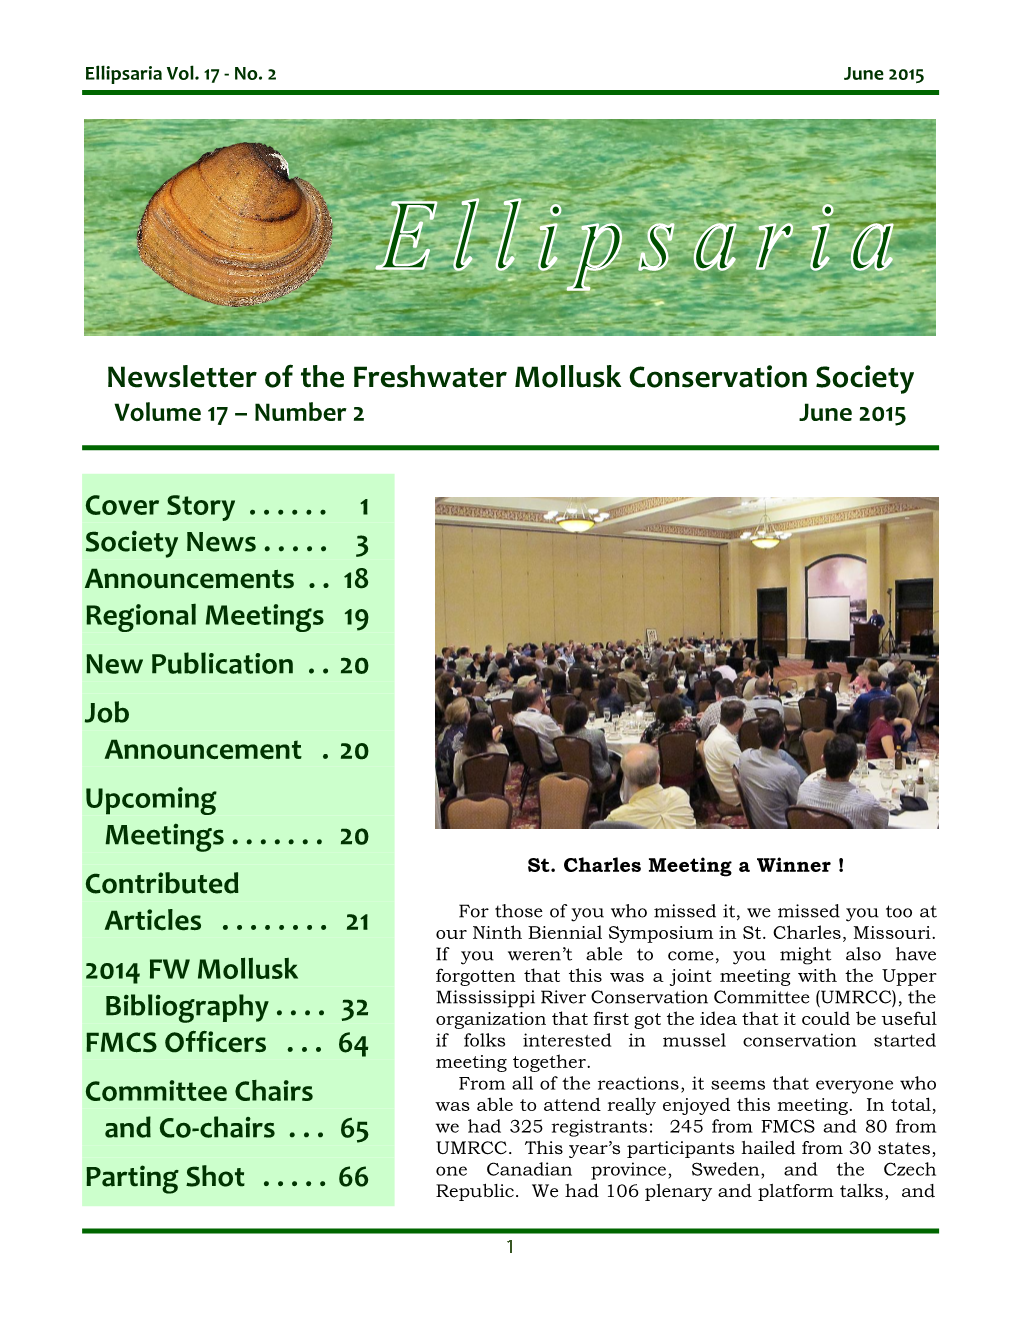 Newsletter of the Freshwater Mollusk Conservation Society Volume 17 – Number 2 June 2015